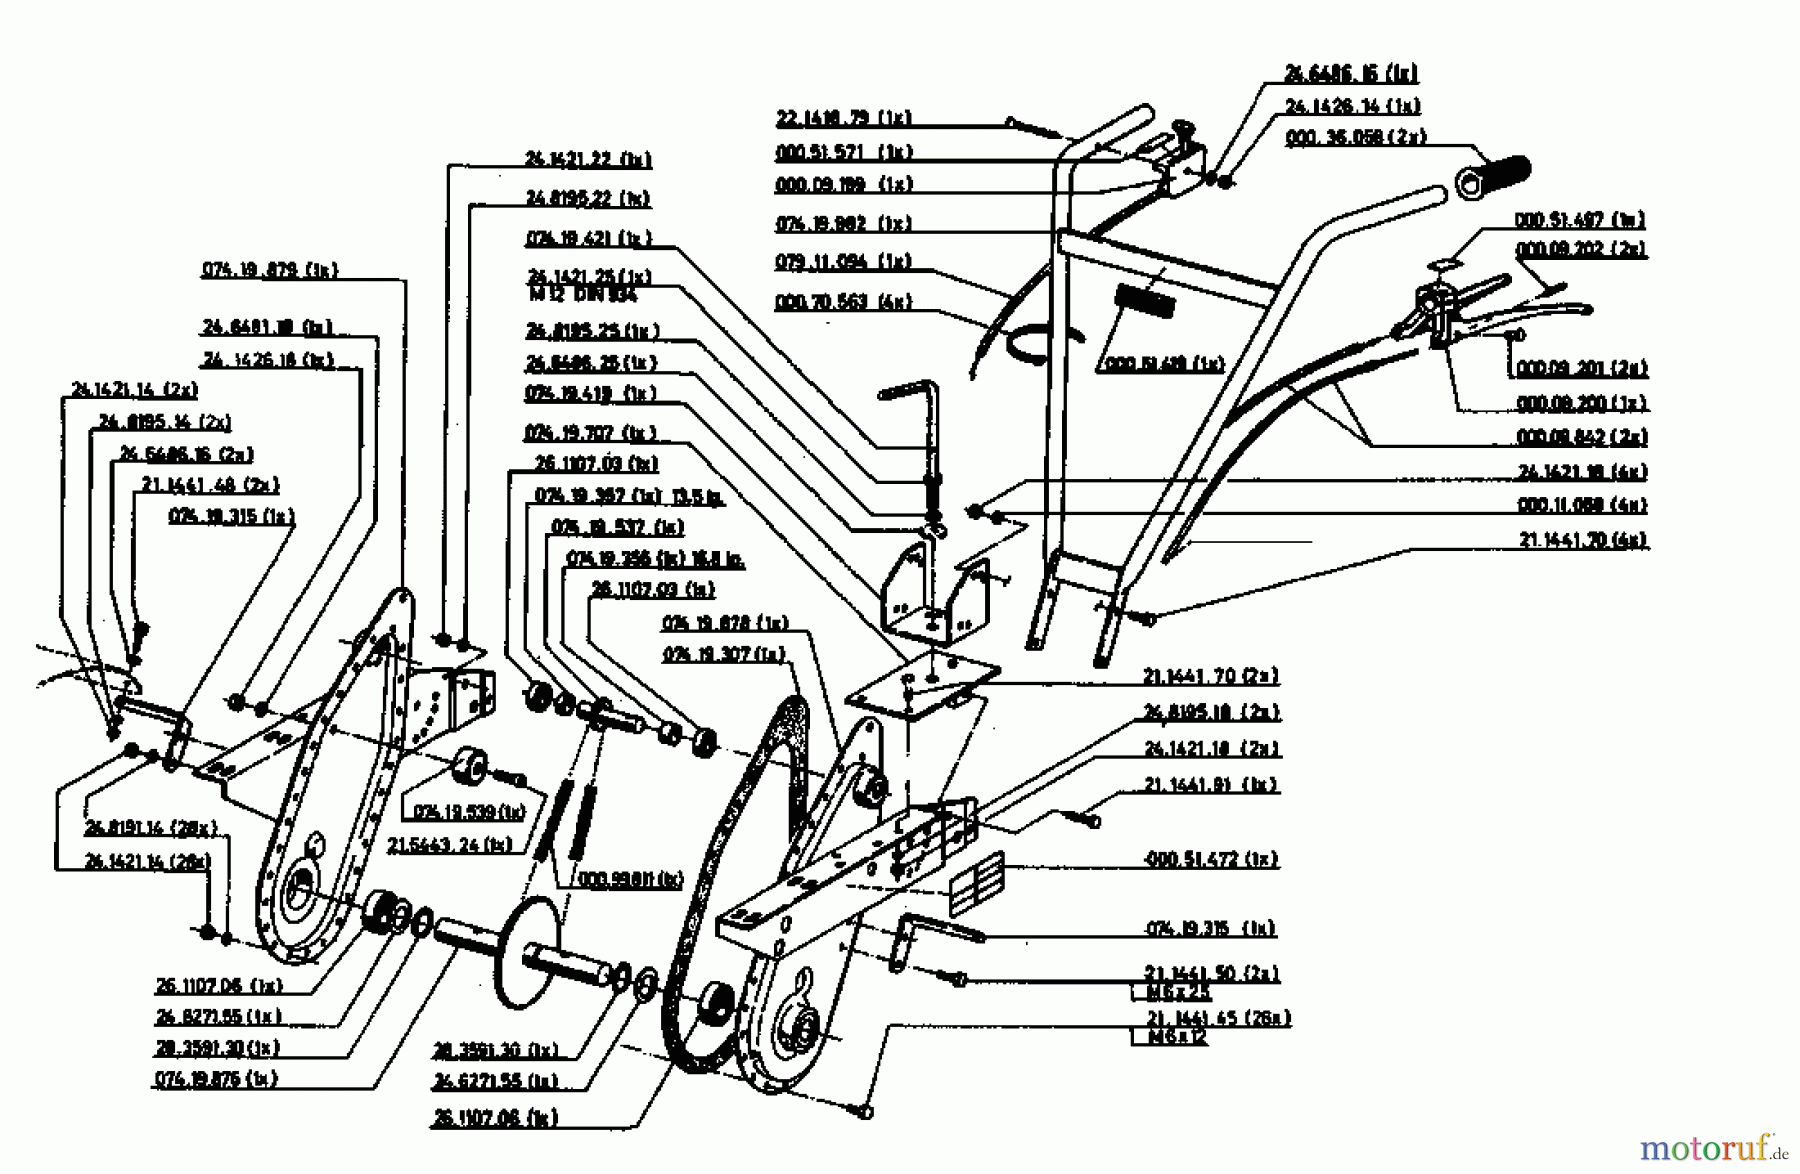  Gutbrod Motobineuse MB 62-52 KA 07518.03  (1994) Machine de base